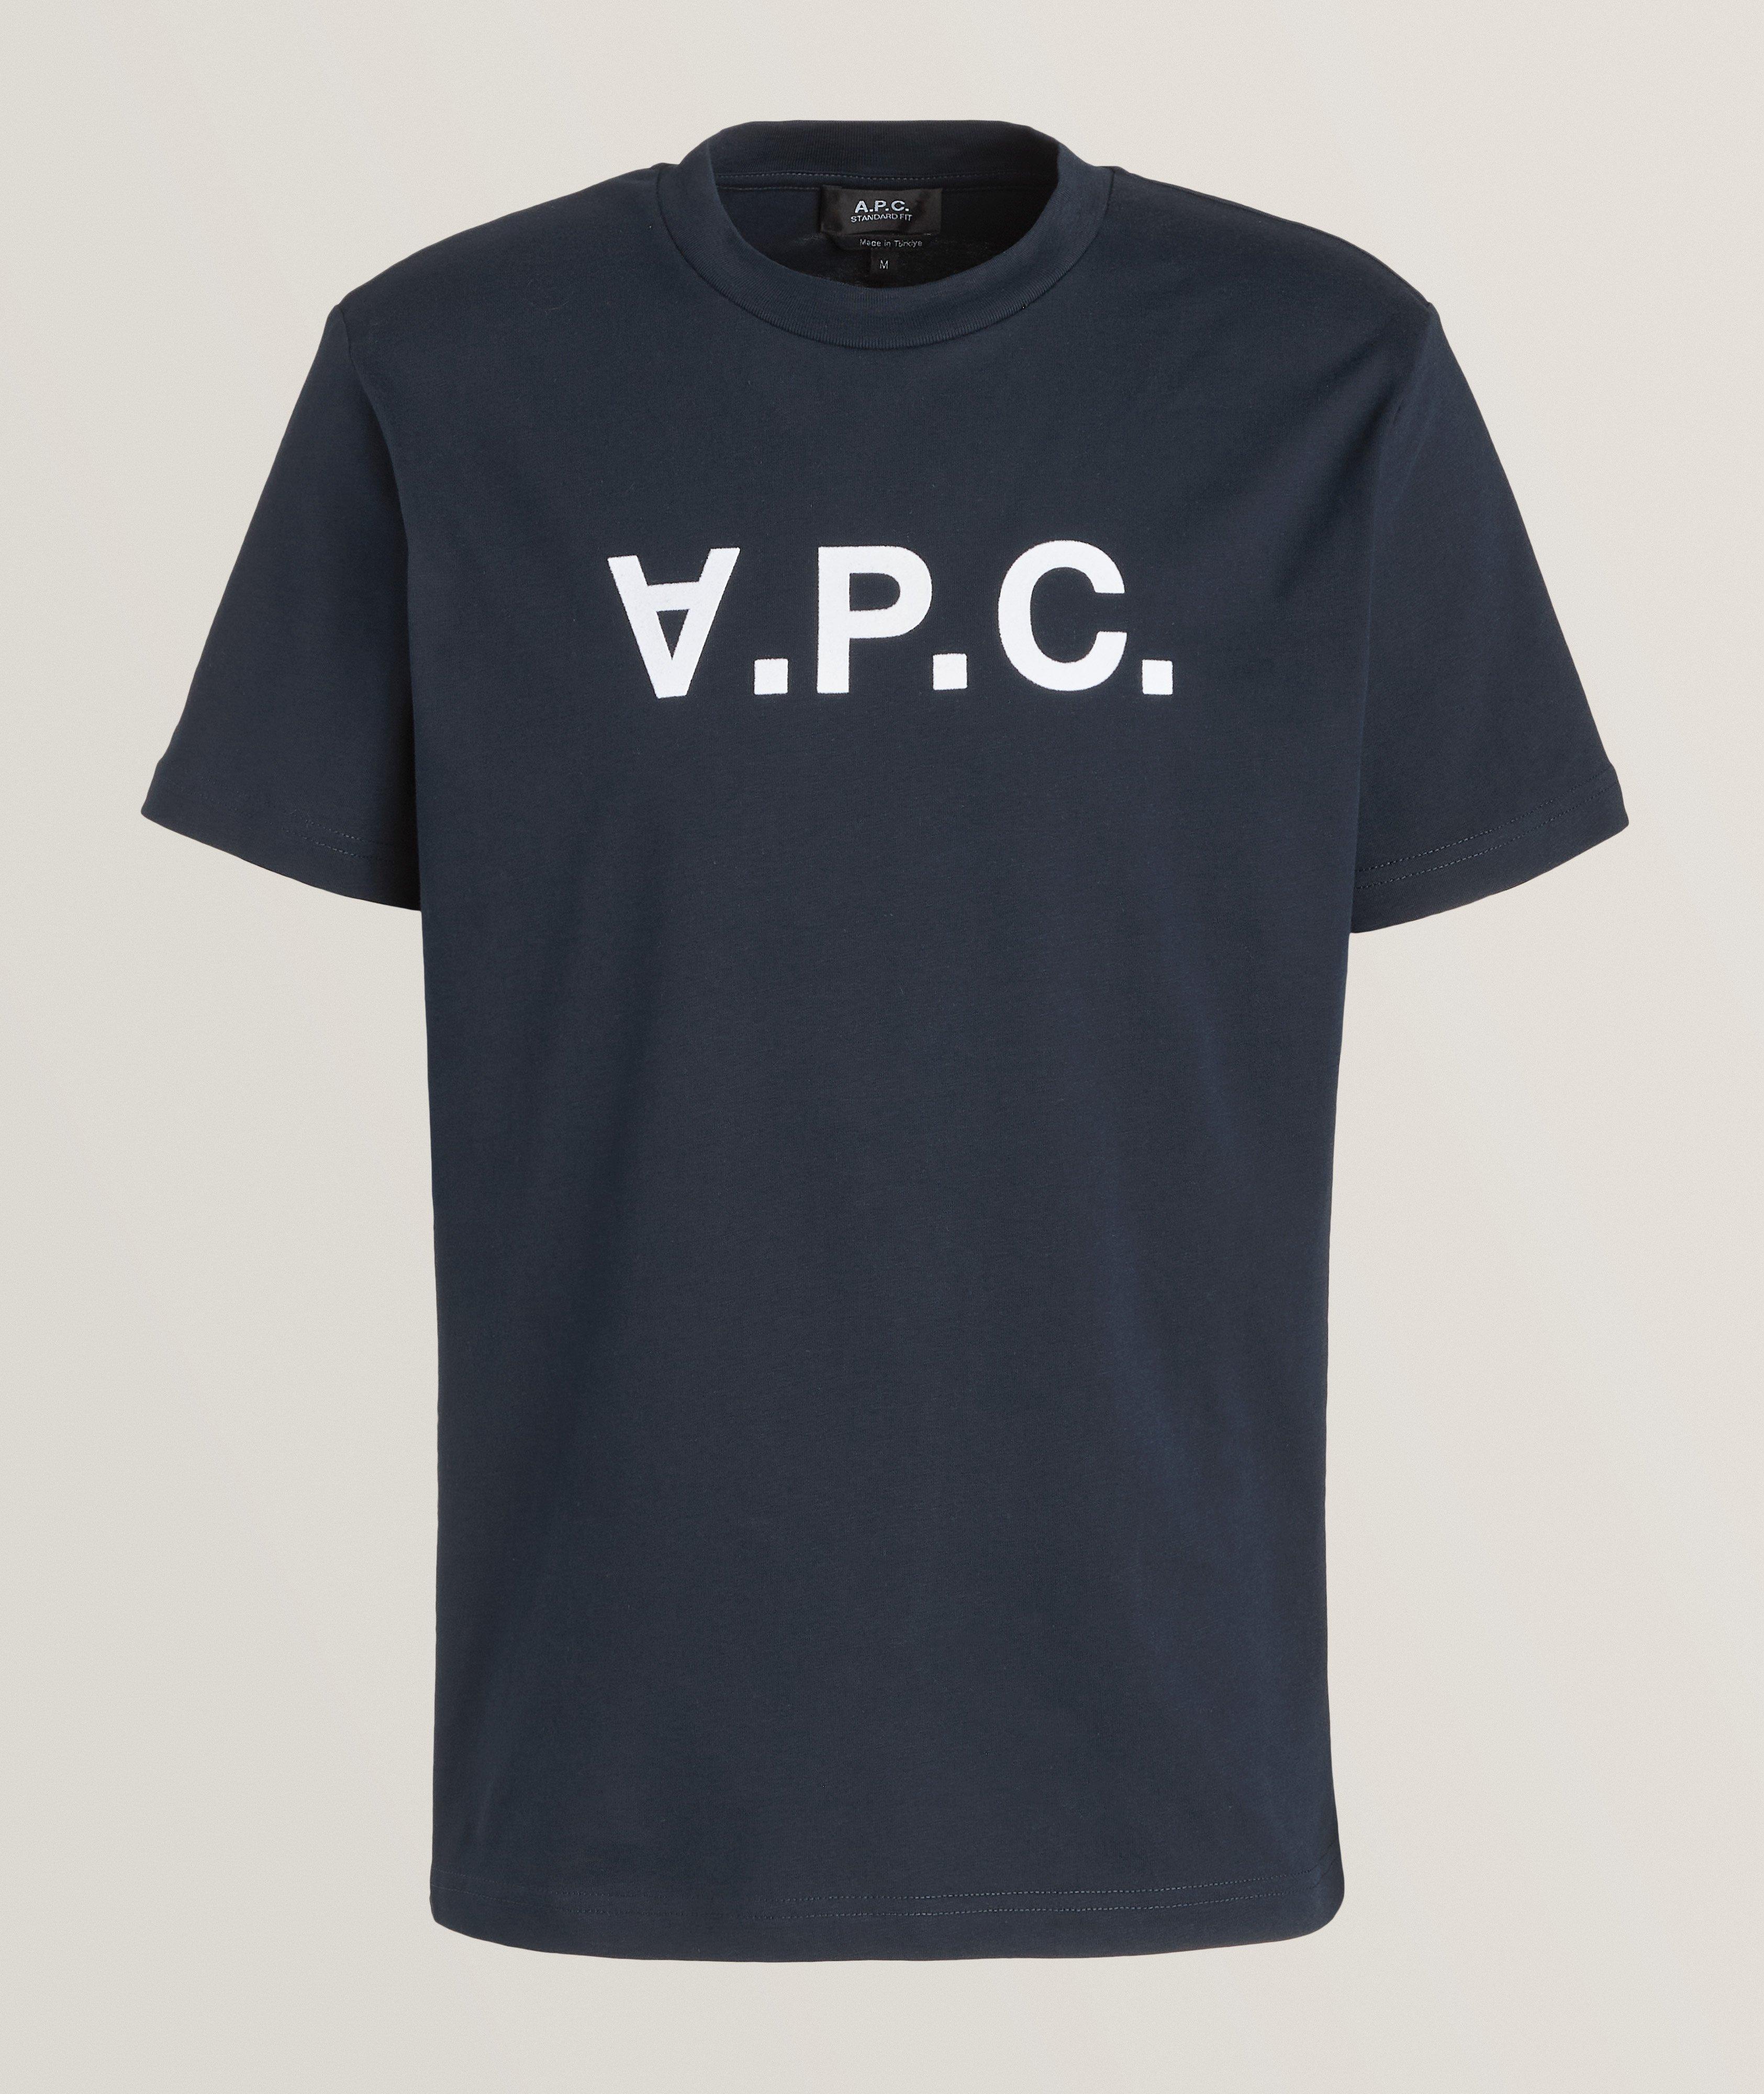 Grand VPC Cotton T-Shirt image 0